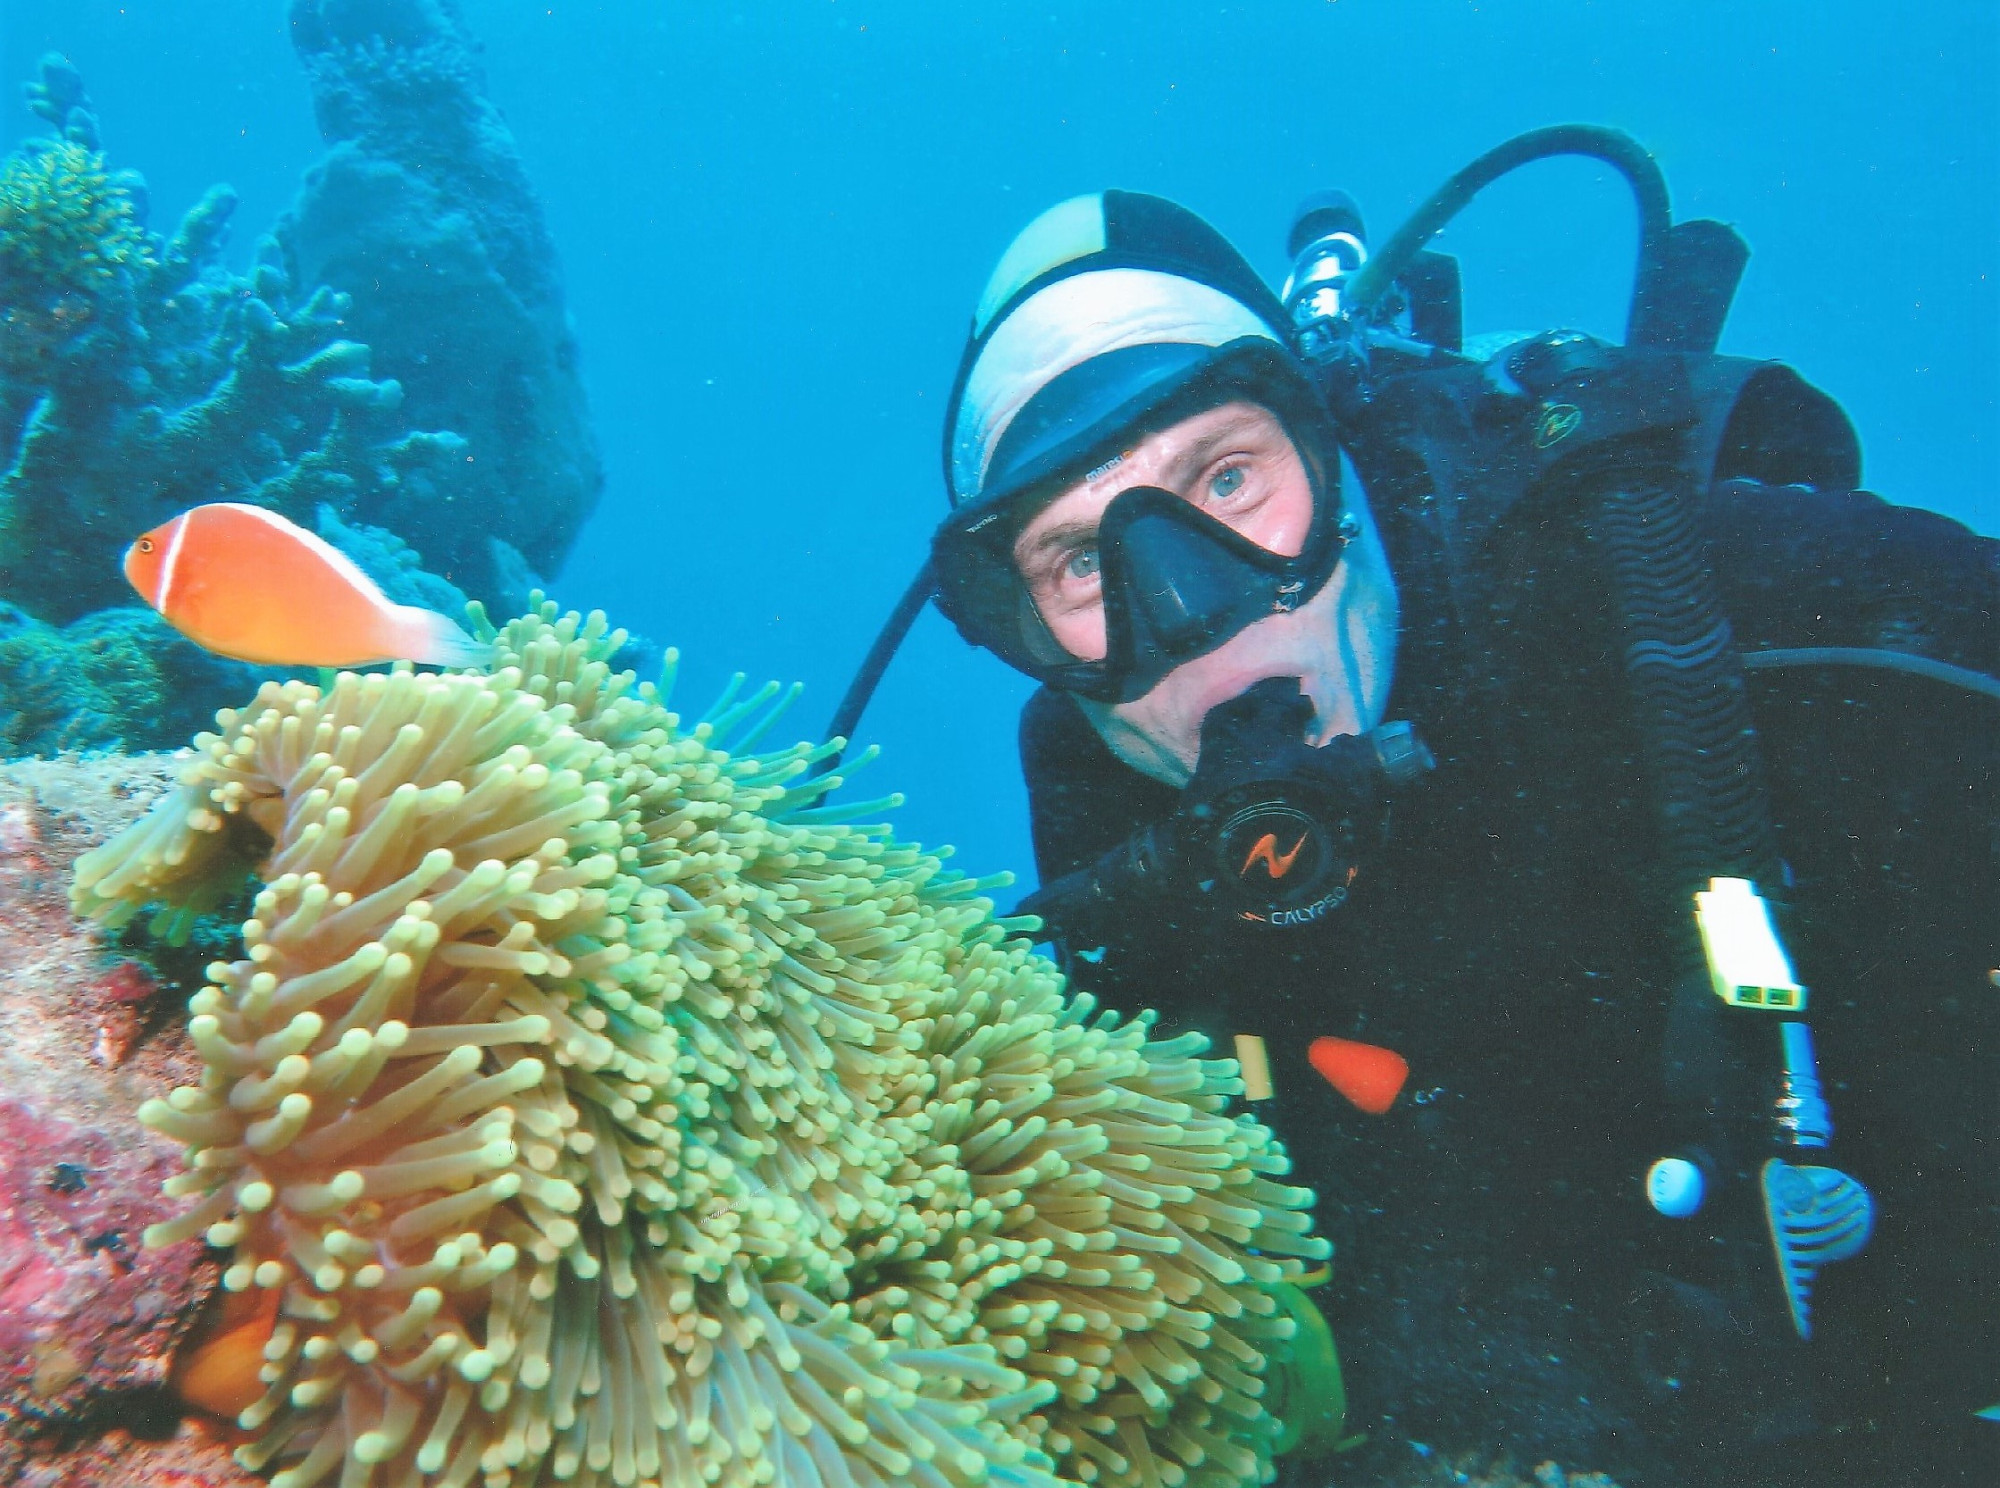 First Underwater Pictre